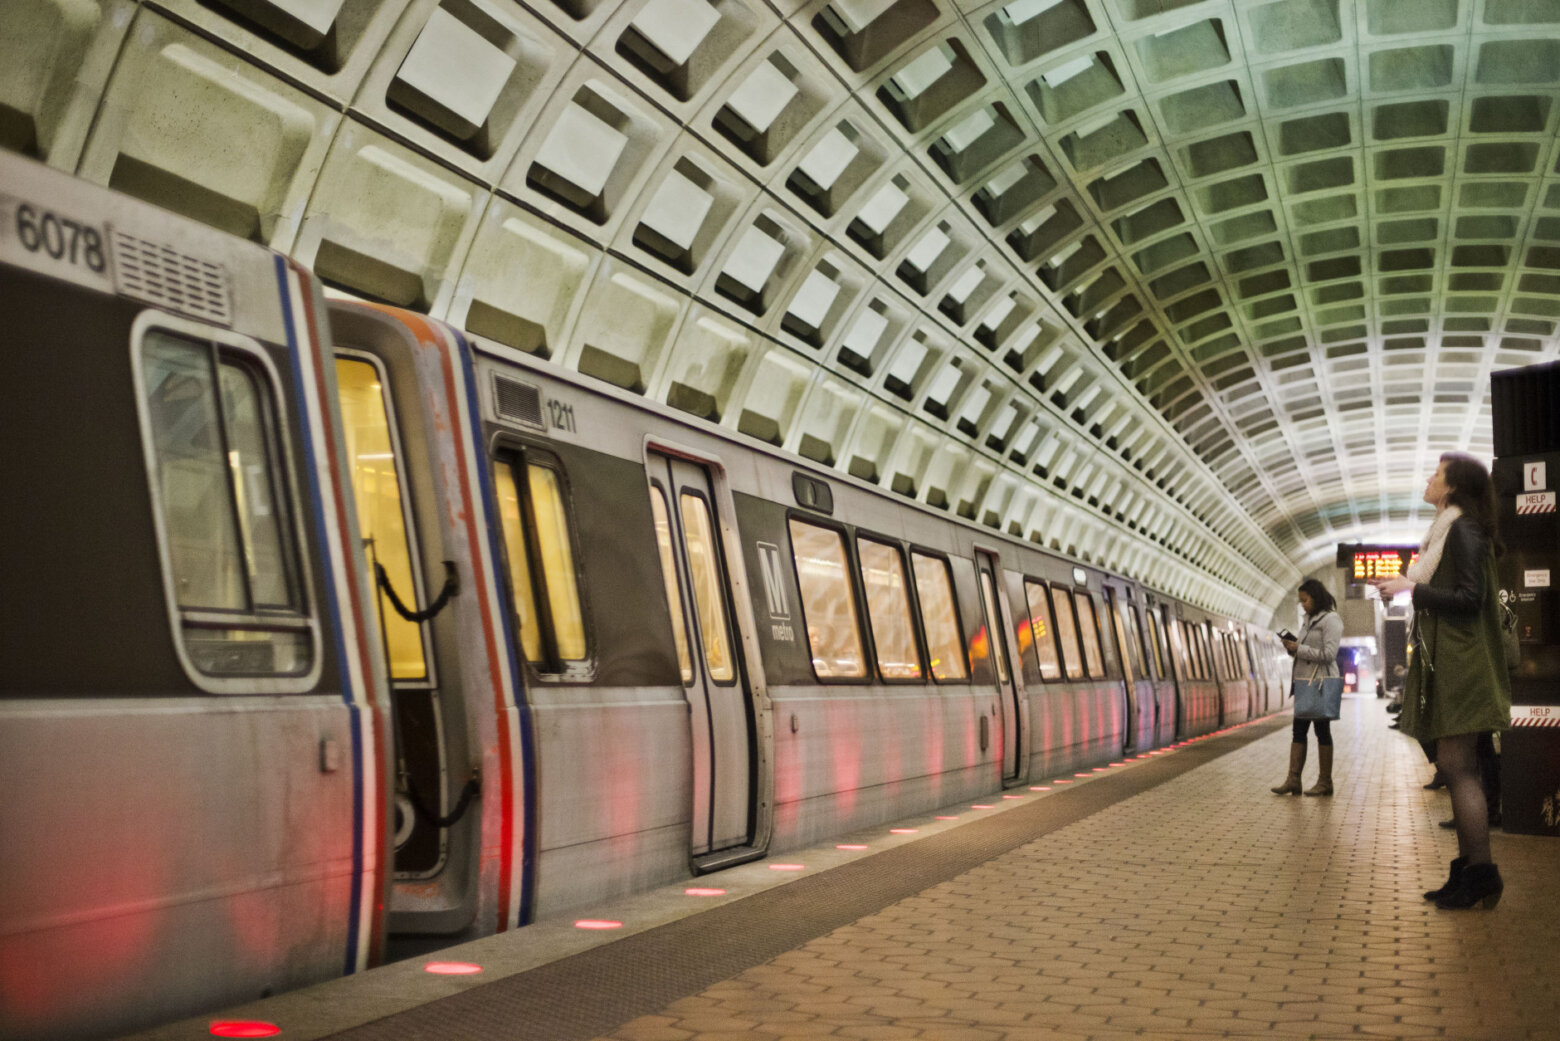 U.S. Secretary of Transportation transfers Metro safety oversight to FTA